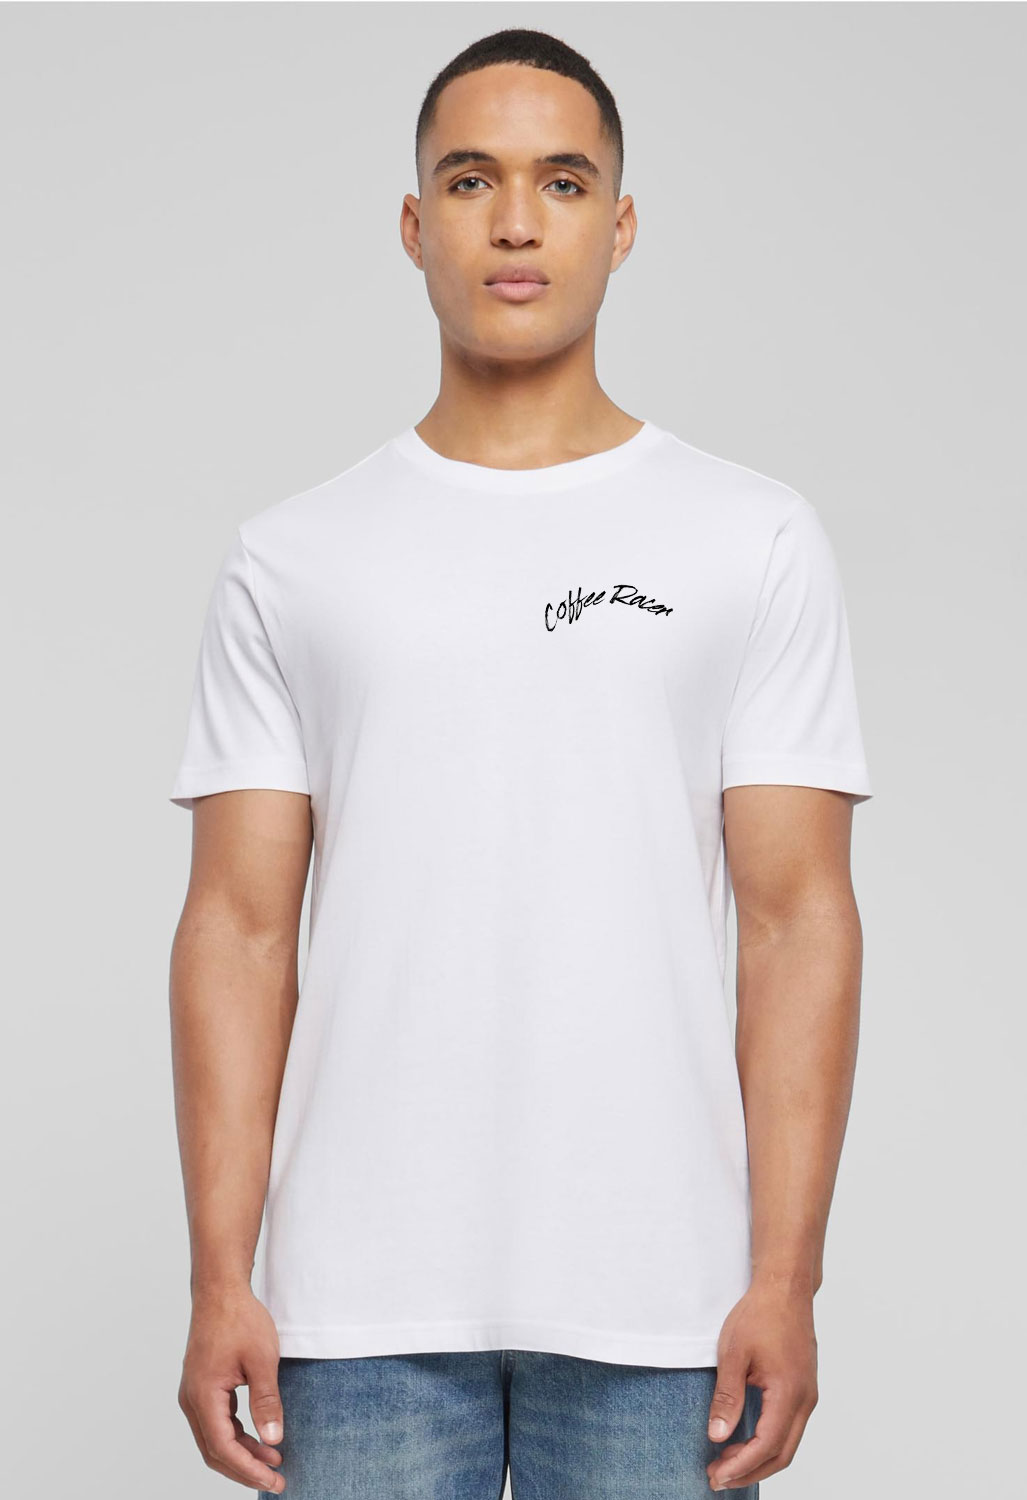 OV-Style CoffeeRacer Shirt weiss